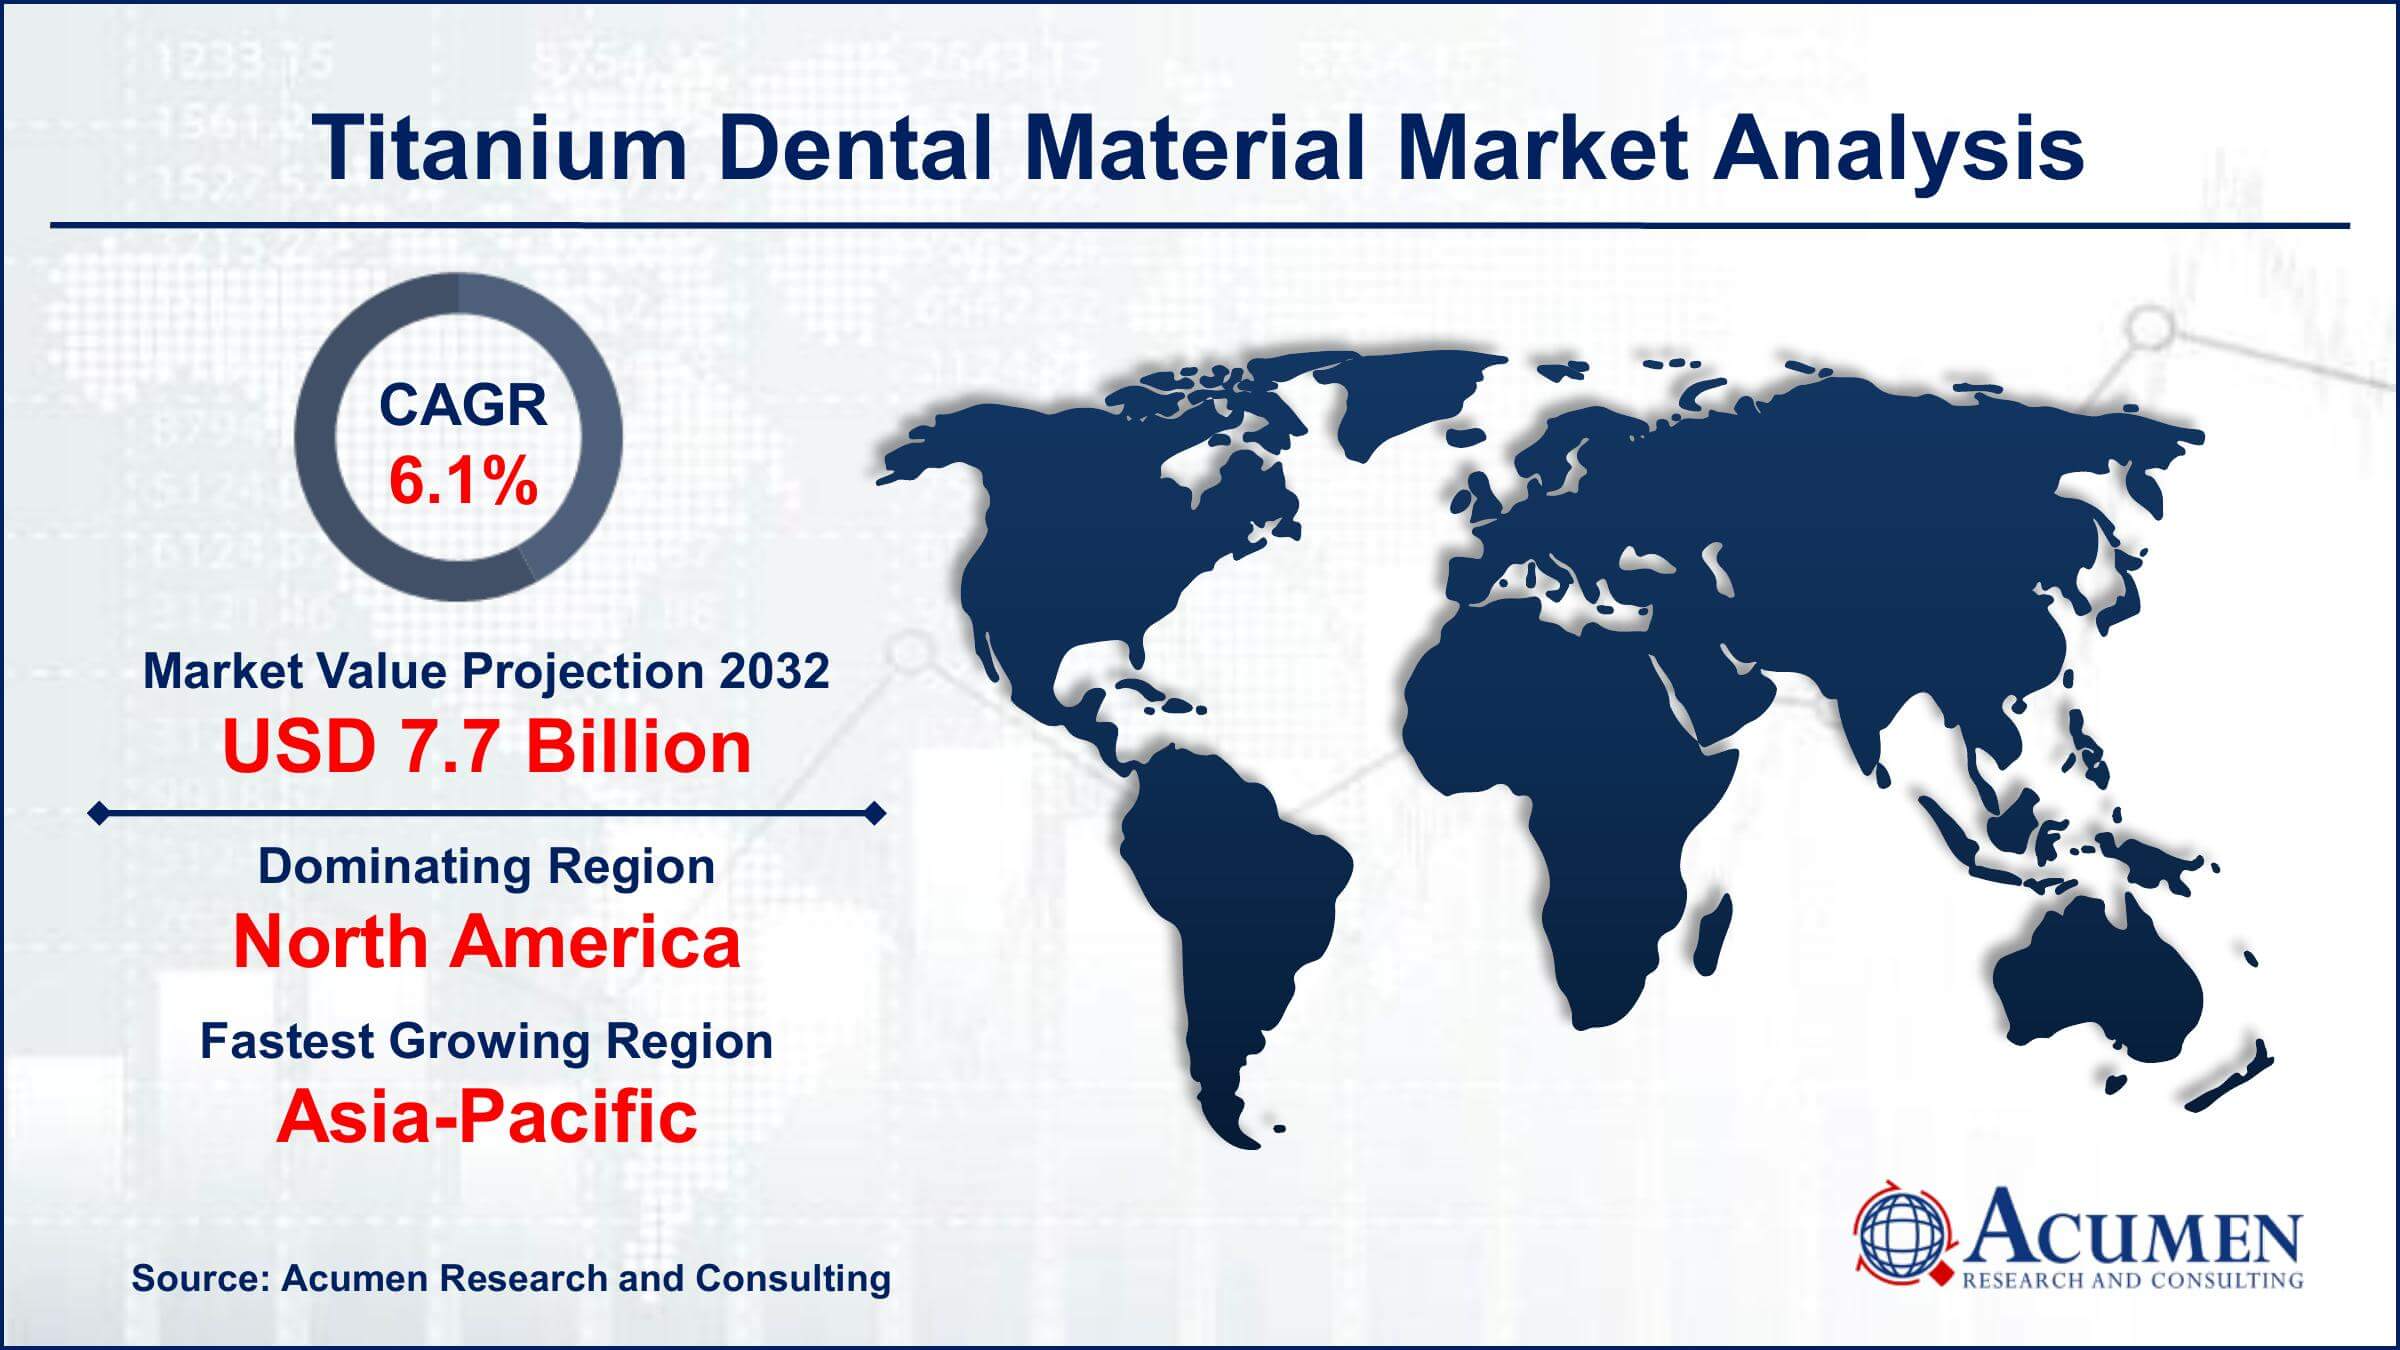 Global Titanium Dental Material Market Trends